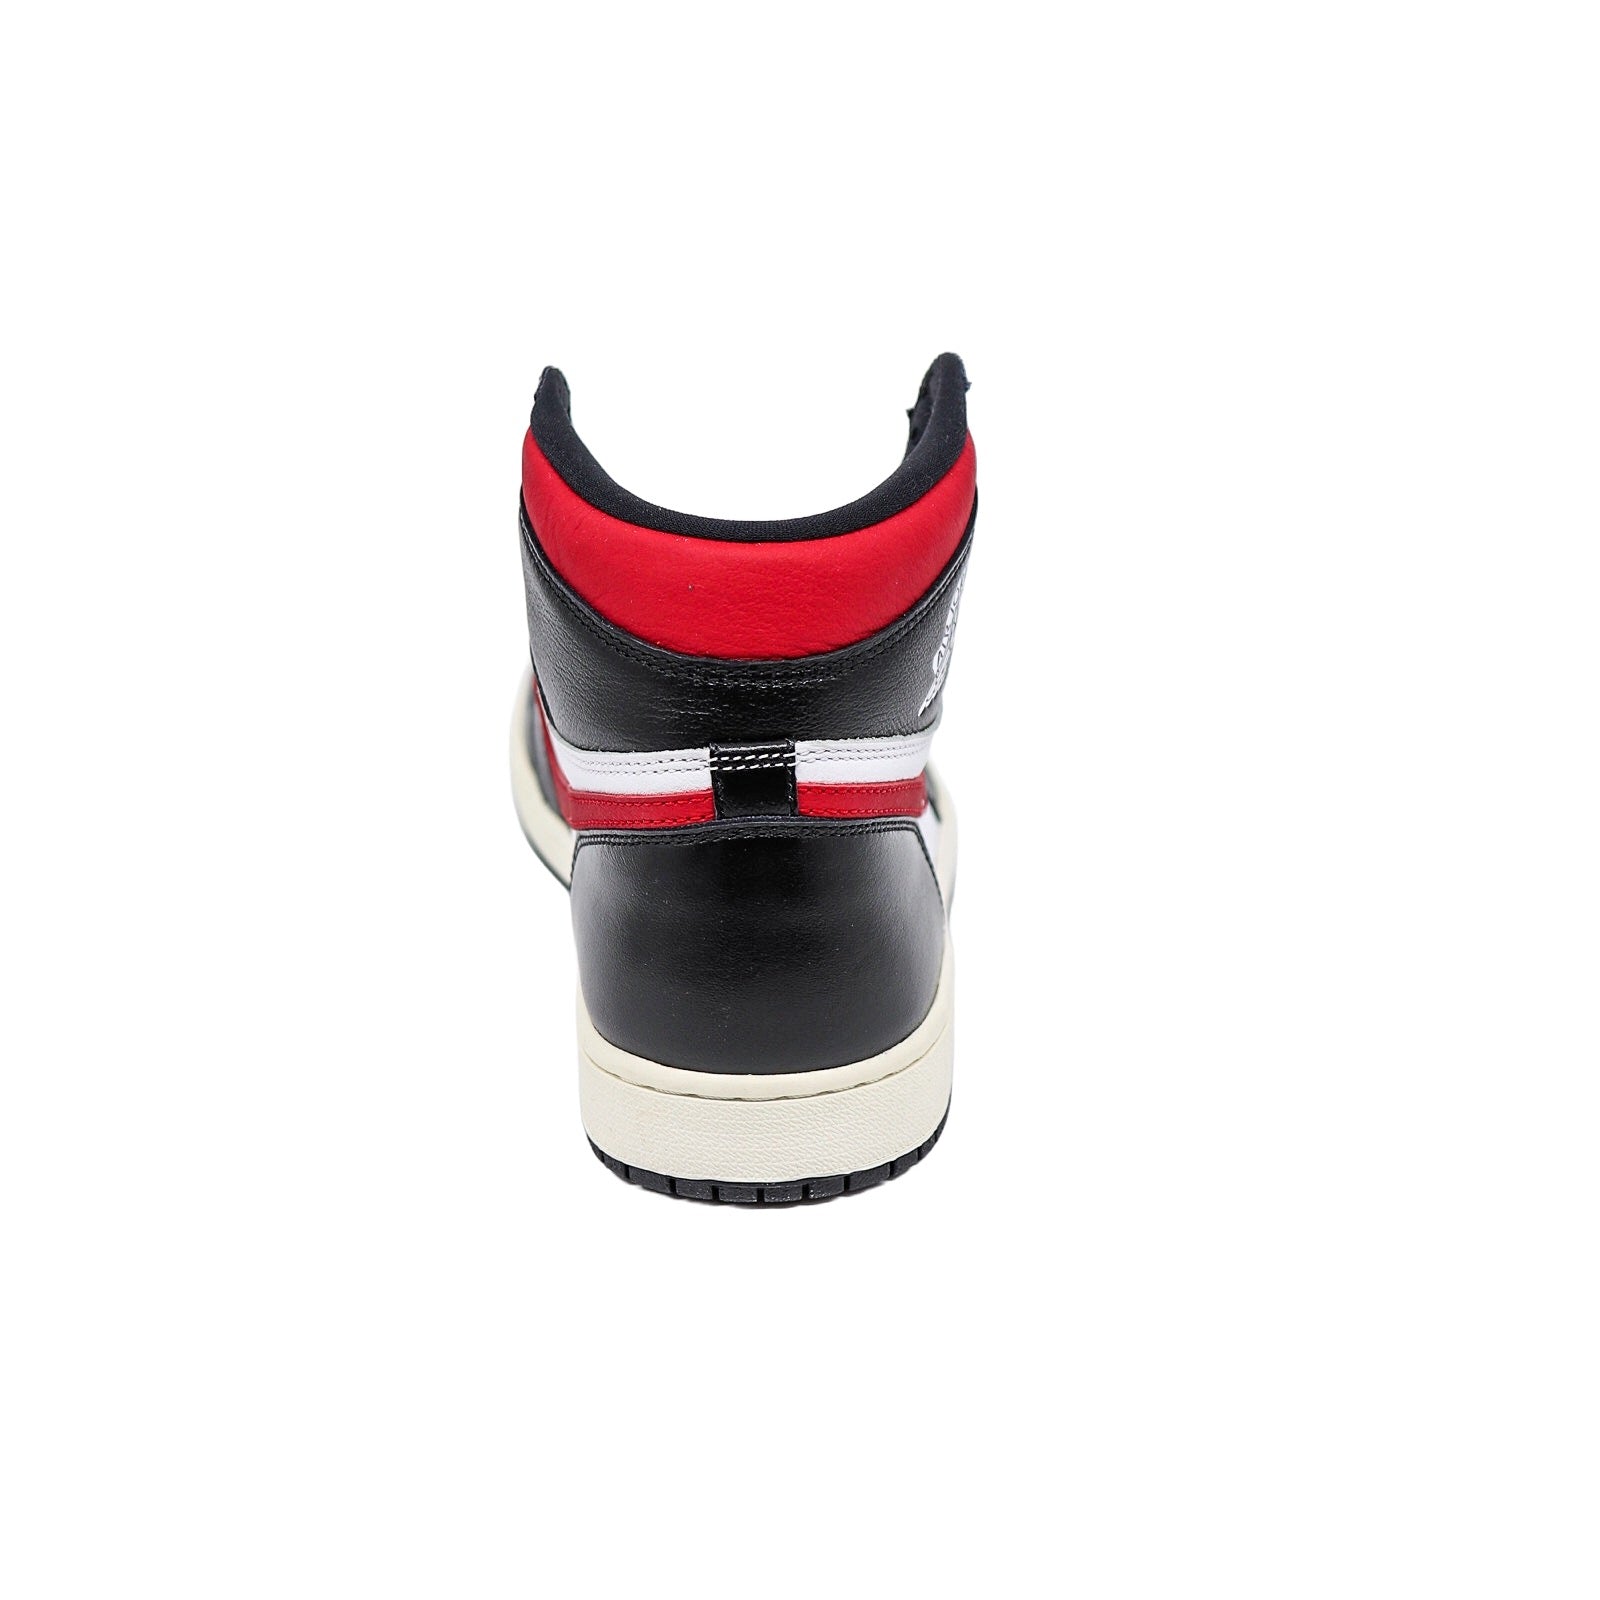 Air Jordan Brand is debuting the Air Jordan XXX1 Black Cat during the (GS), Gym Red